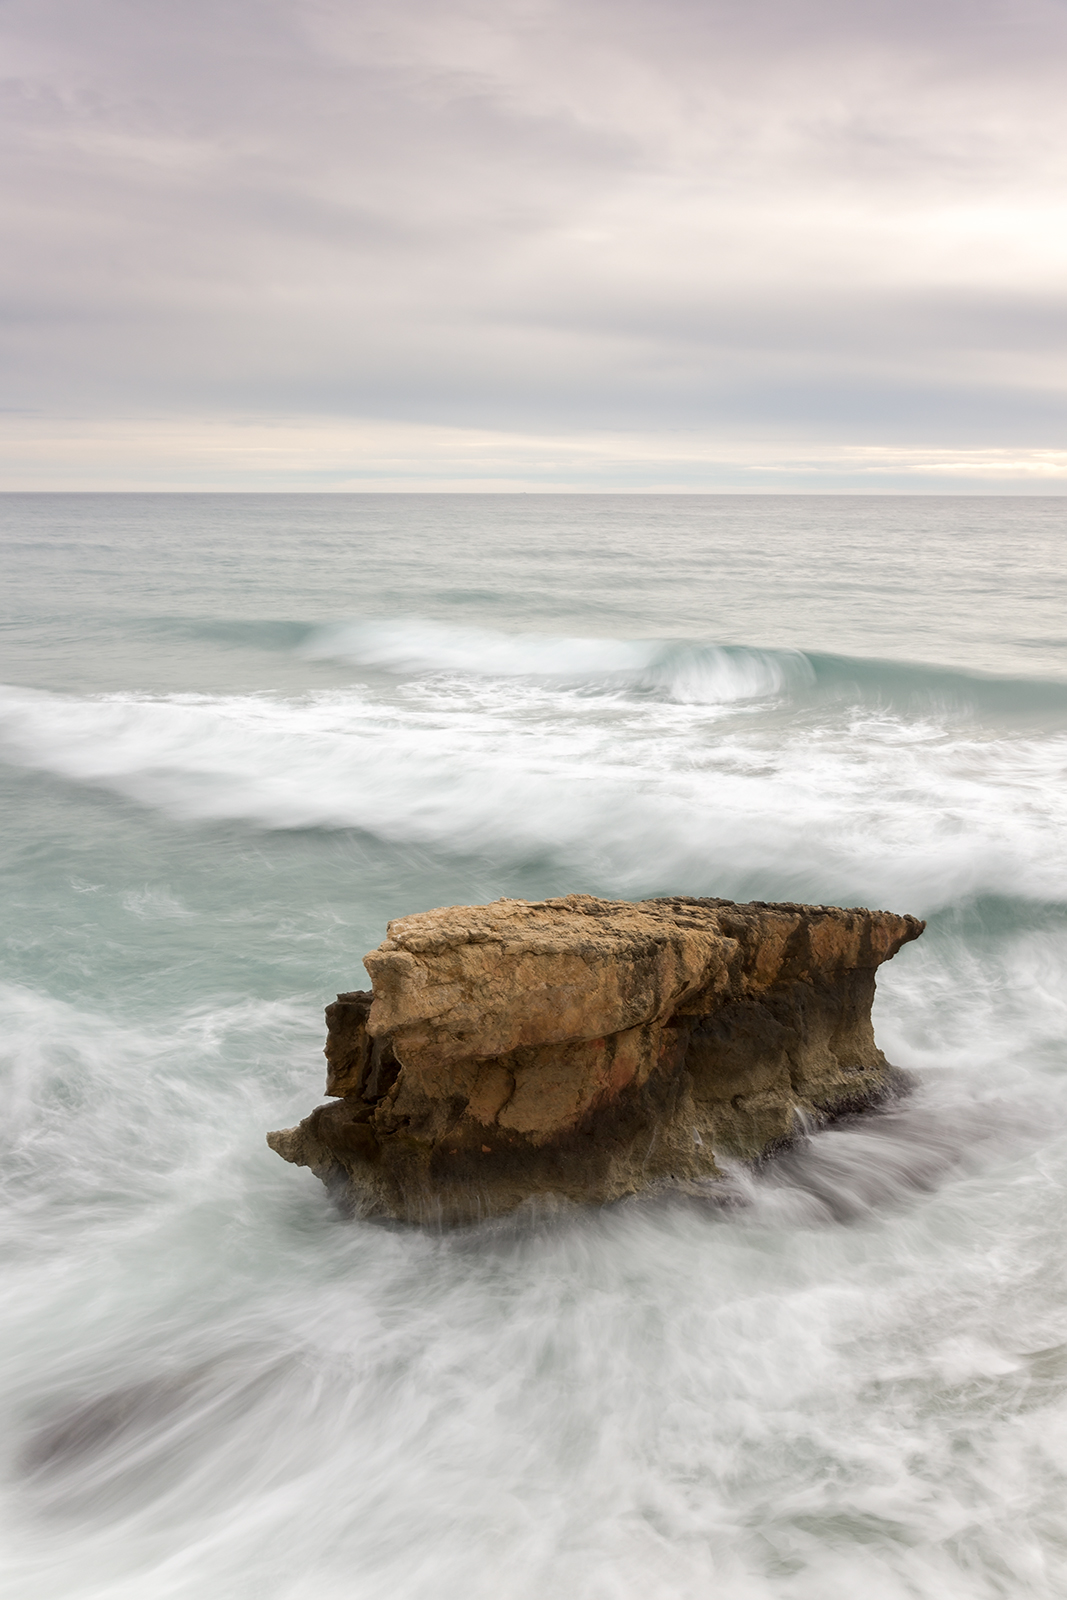 Paisaje costa de Tarragona, Tamarit, roca en el mar con oleaje,Danilatorre,danilatorre, Dani Latorre, daniel Latorre